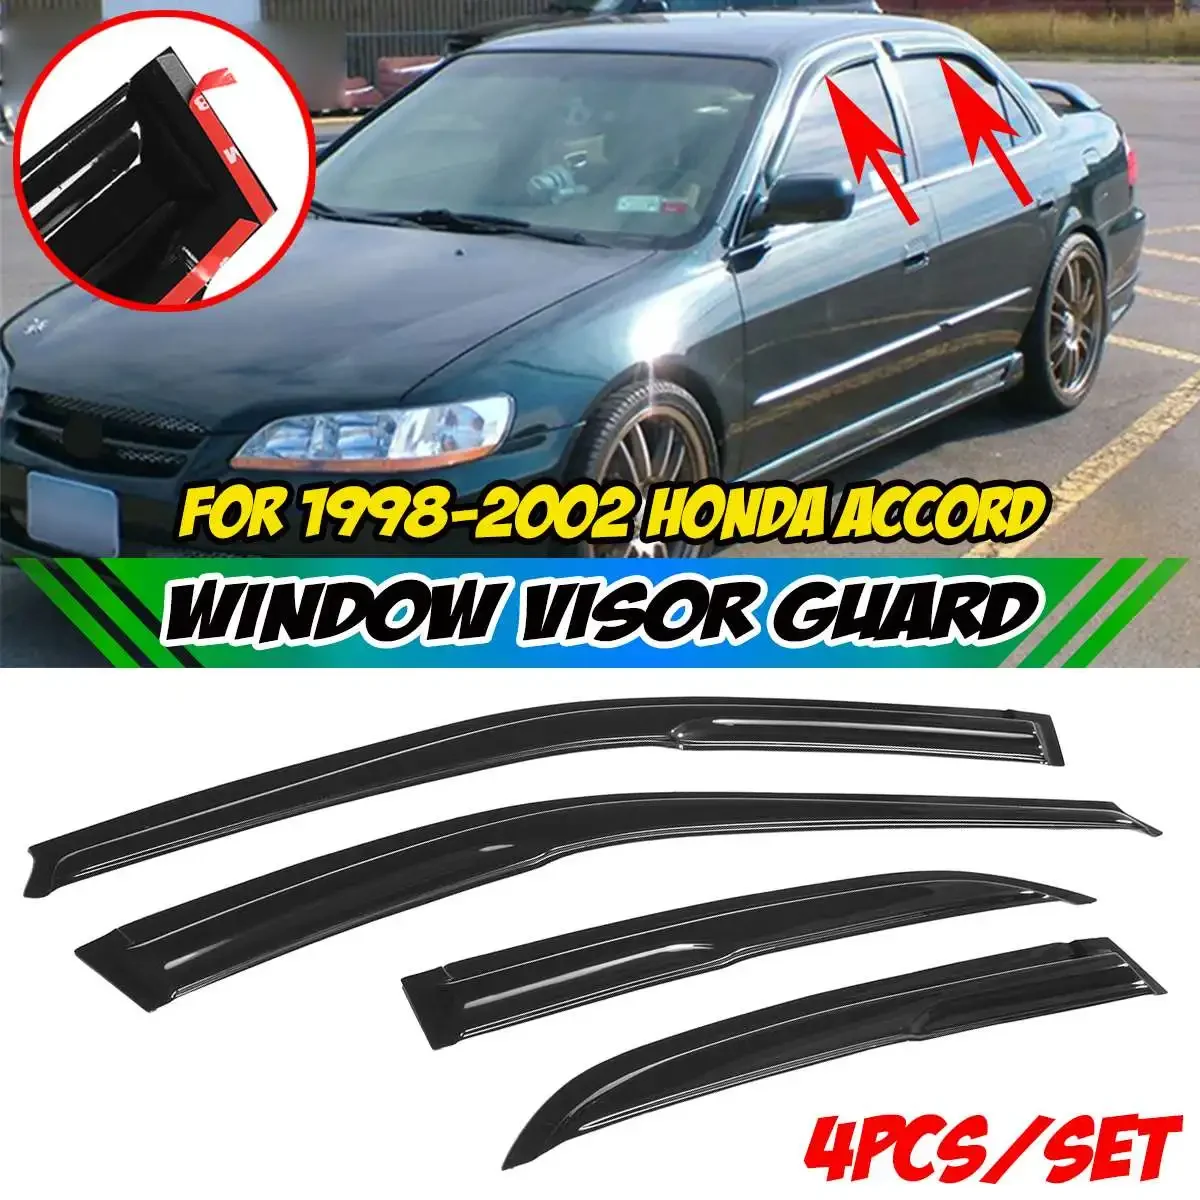 

4x Car Side Visor Guard Vent Black For Honda For Accord 1998-2002 Window Wind Deflectors Window Weatherproof Deflector Body Kit